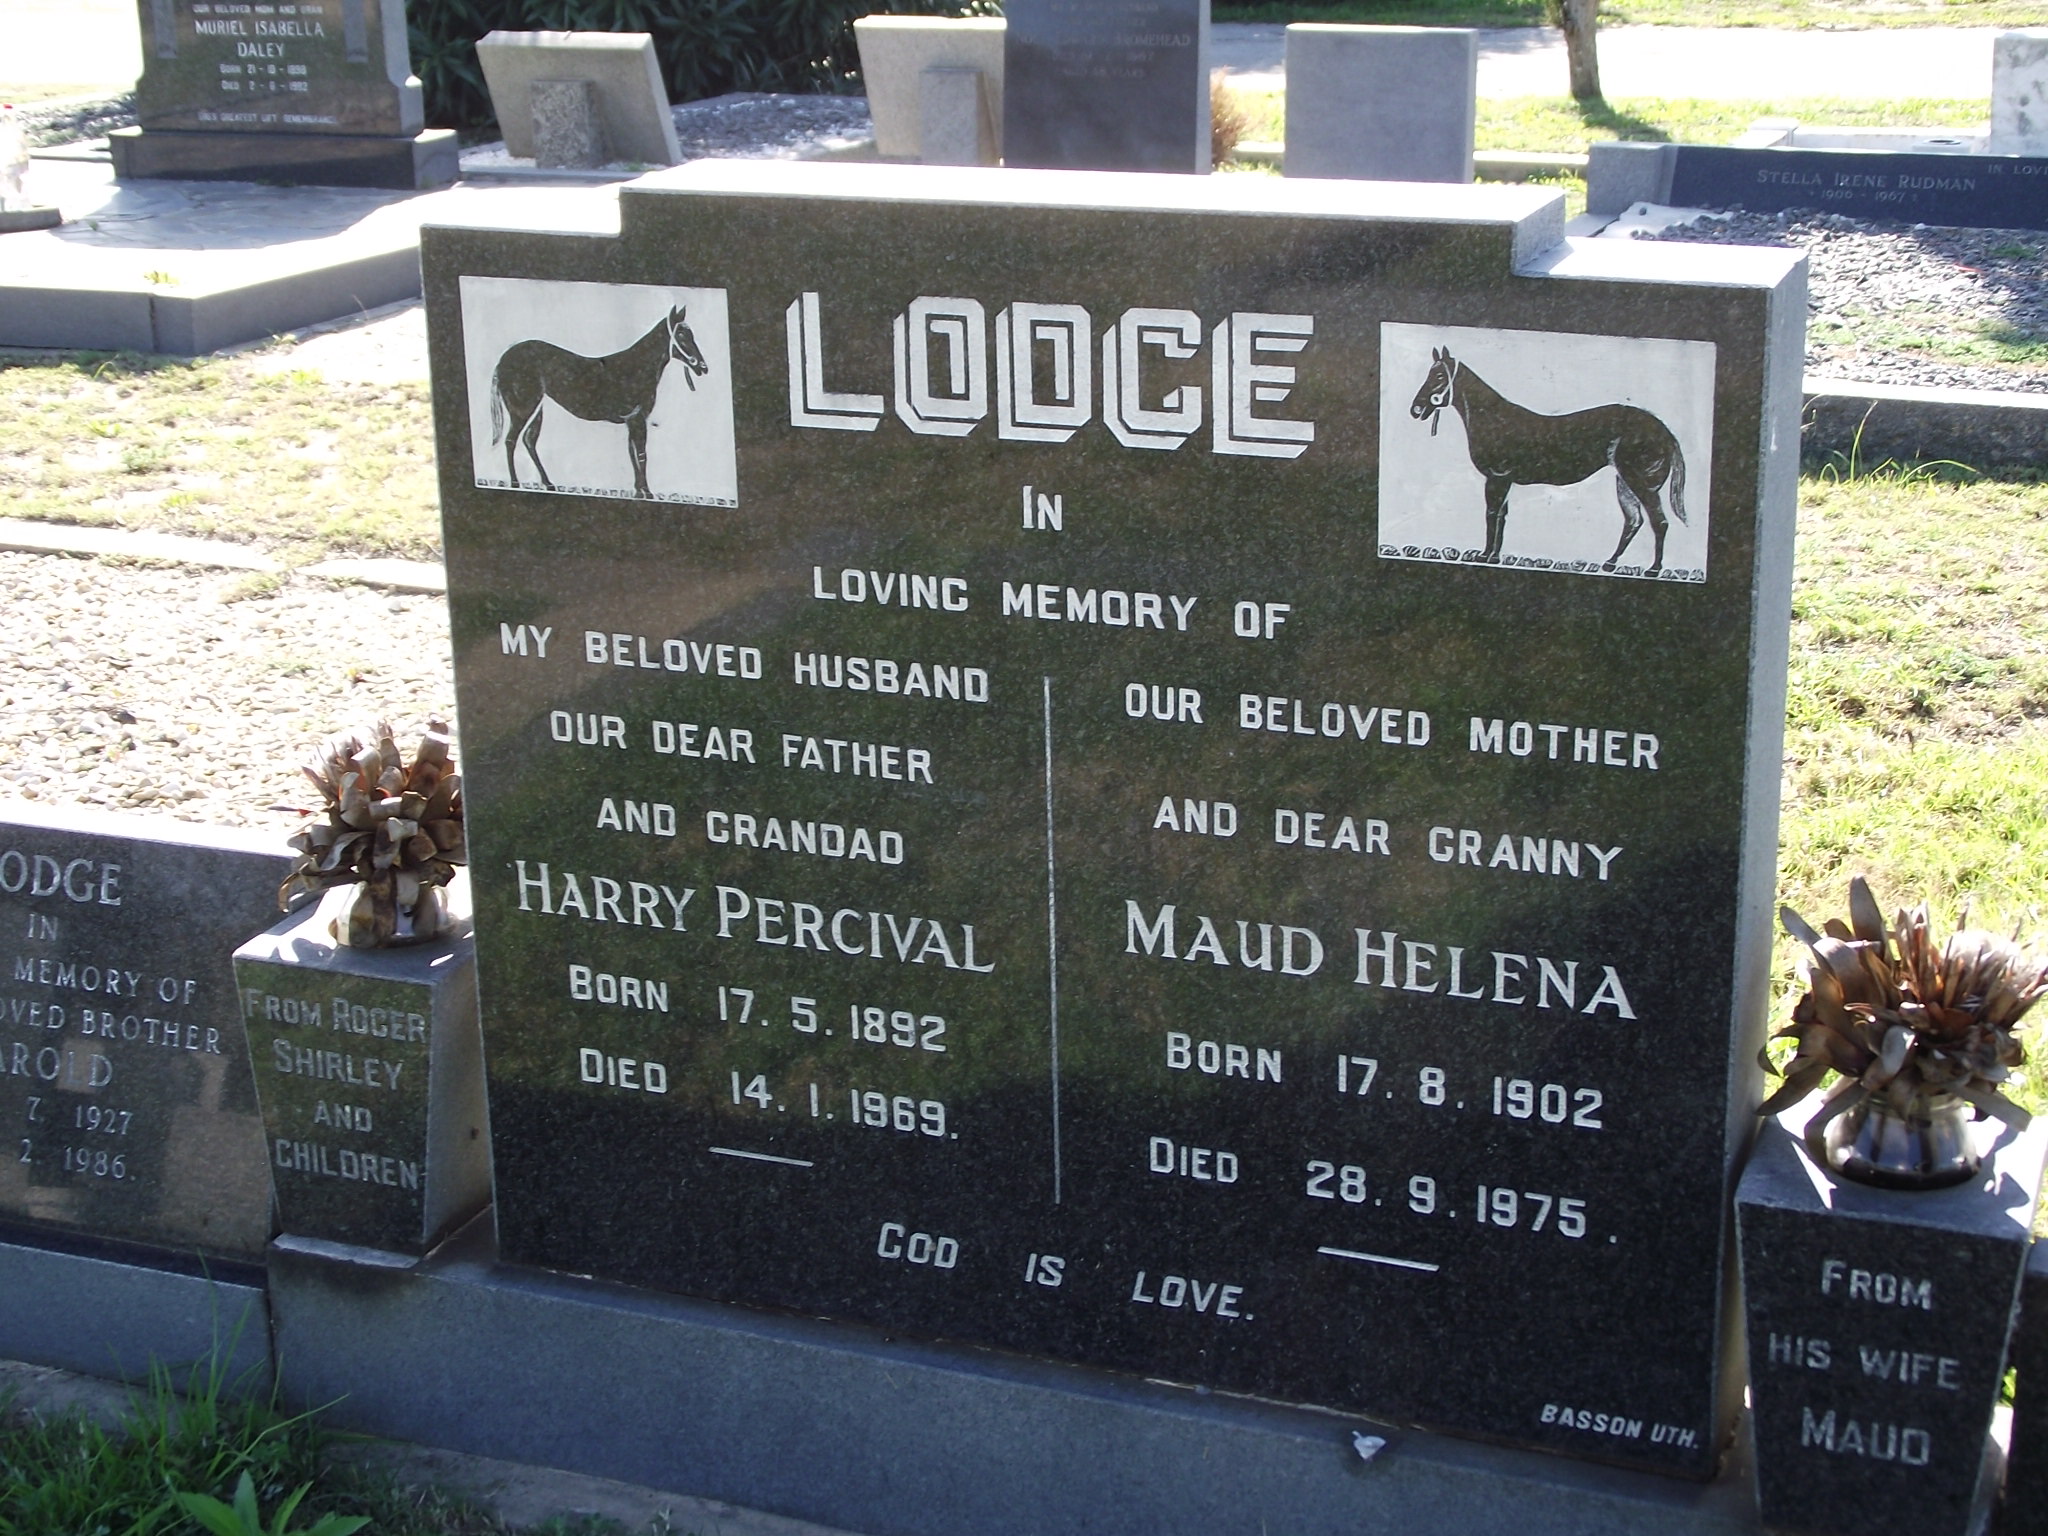 LODGE Harry Percival 1892-1969 & Maud Helena 1902-1975